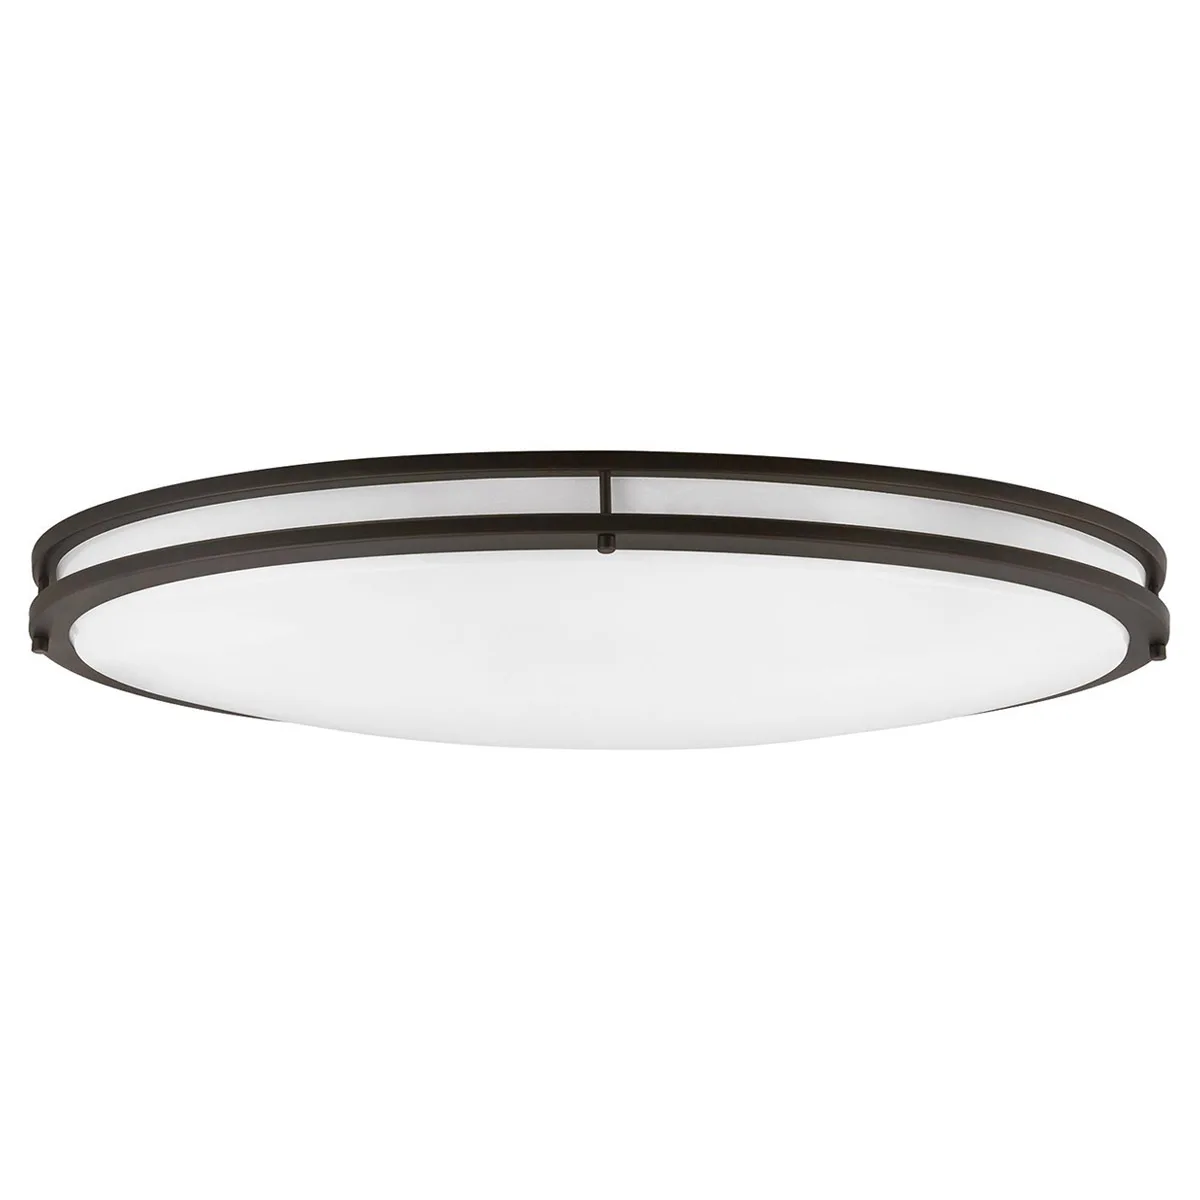 32-Inch  Sunlite LED Oval Flush Mount Ceiling Light Fixture, 30K - Warm White, Dimmable, 3200 Lumens, 40 Watts, Bronze